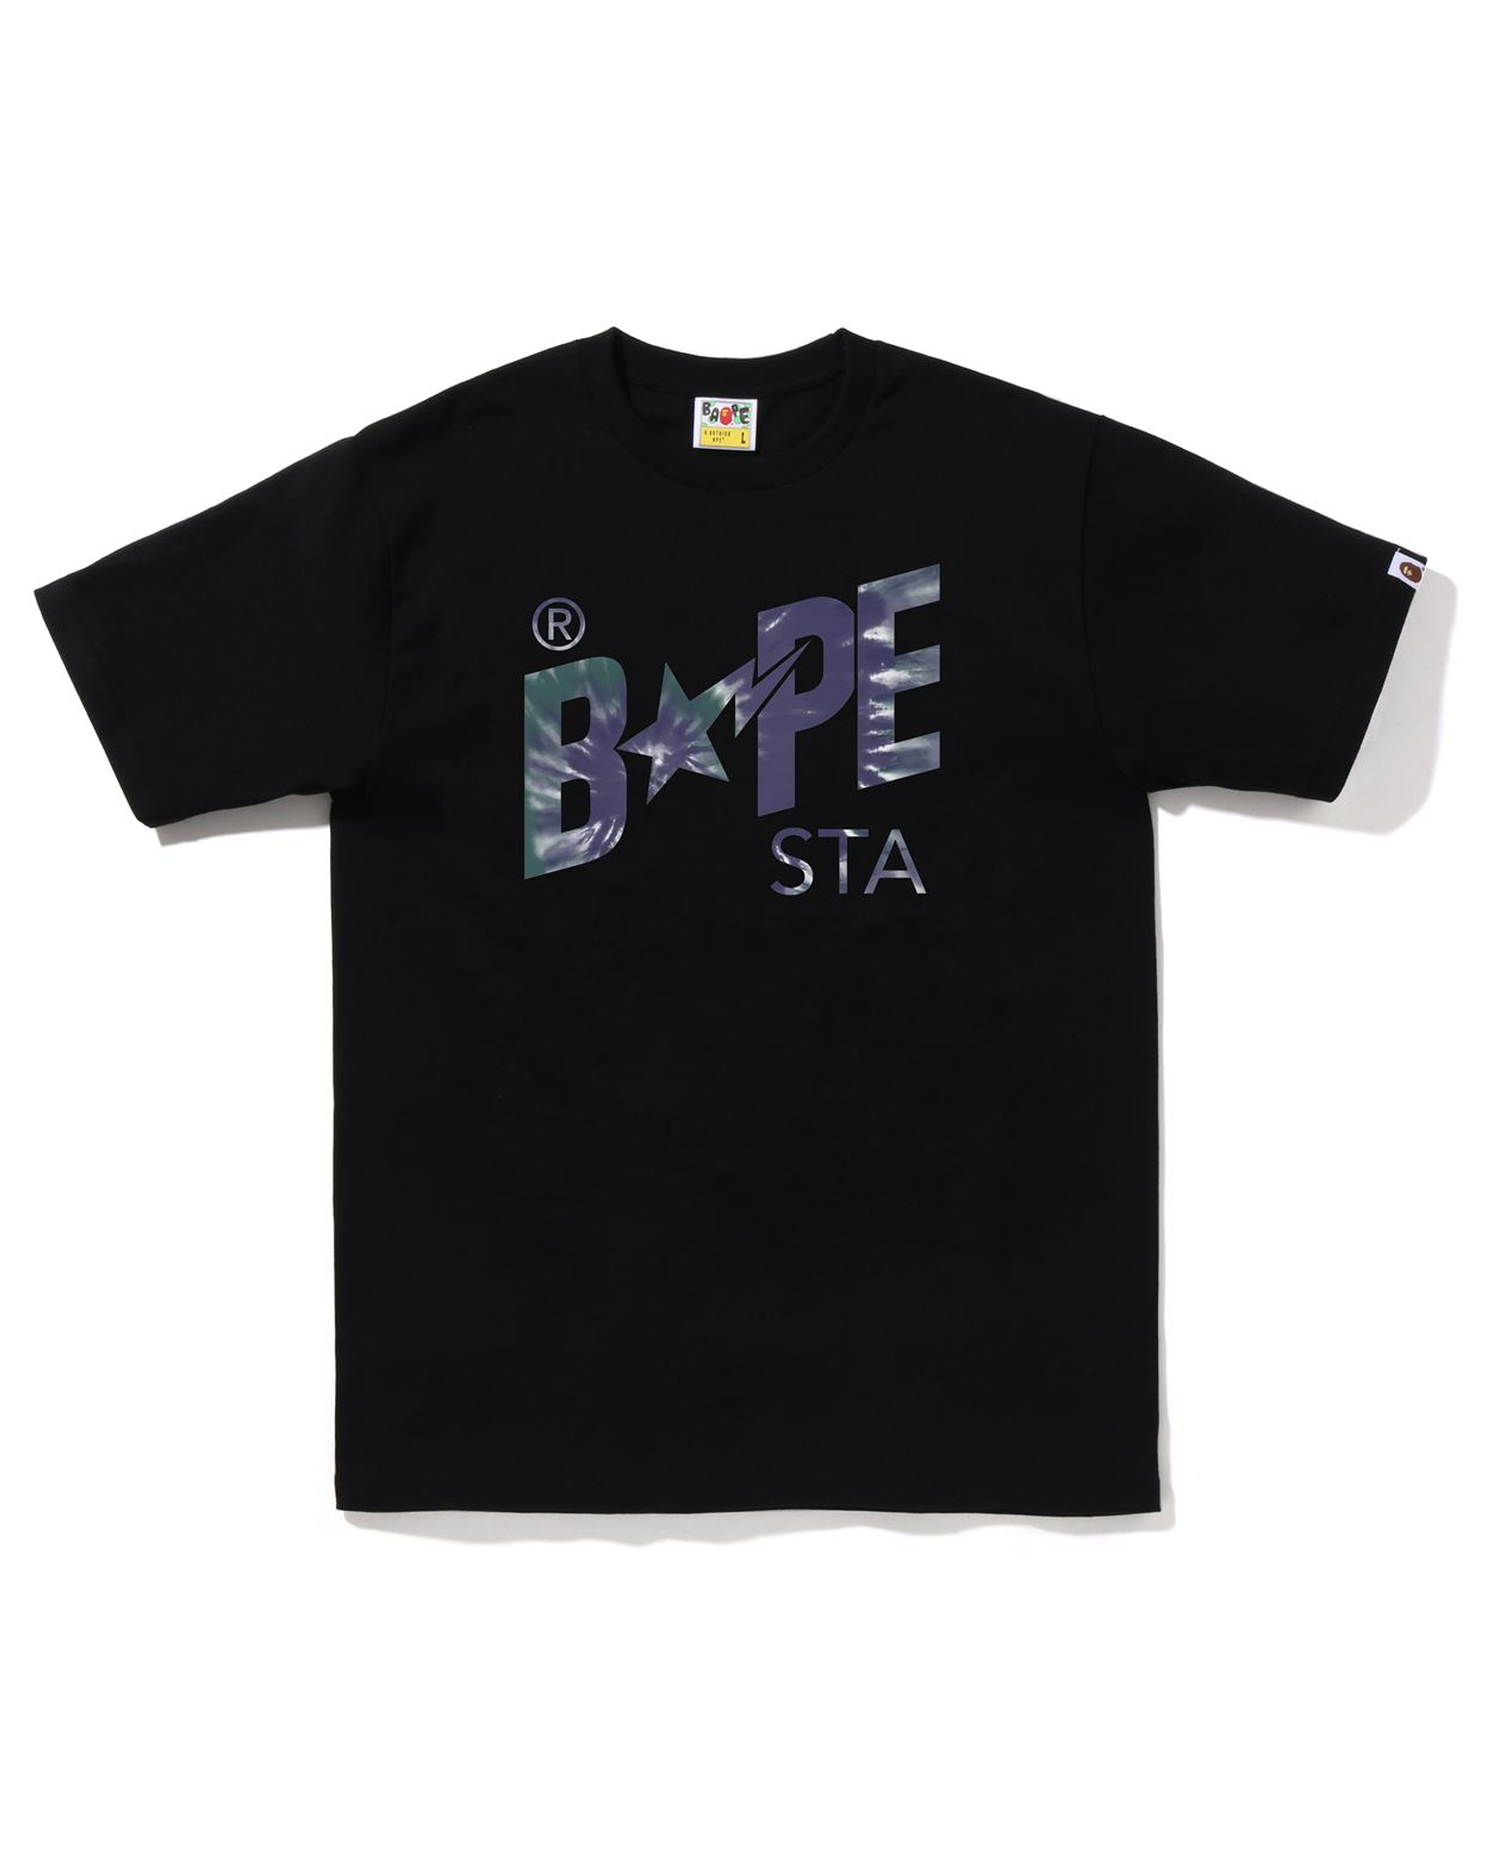 Shop Tie-Dye BAPE Sta Logo Tee Online | BAPE